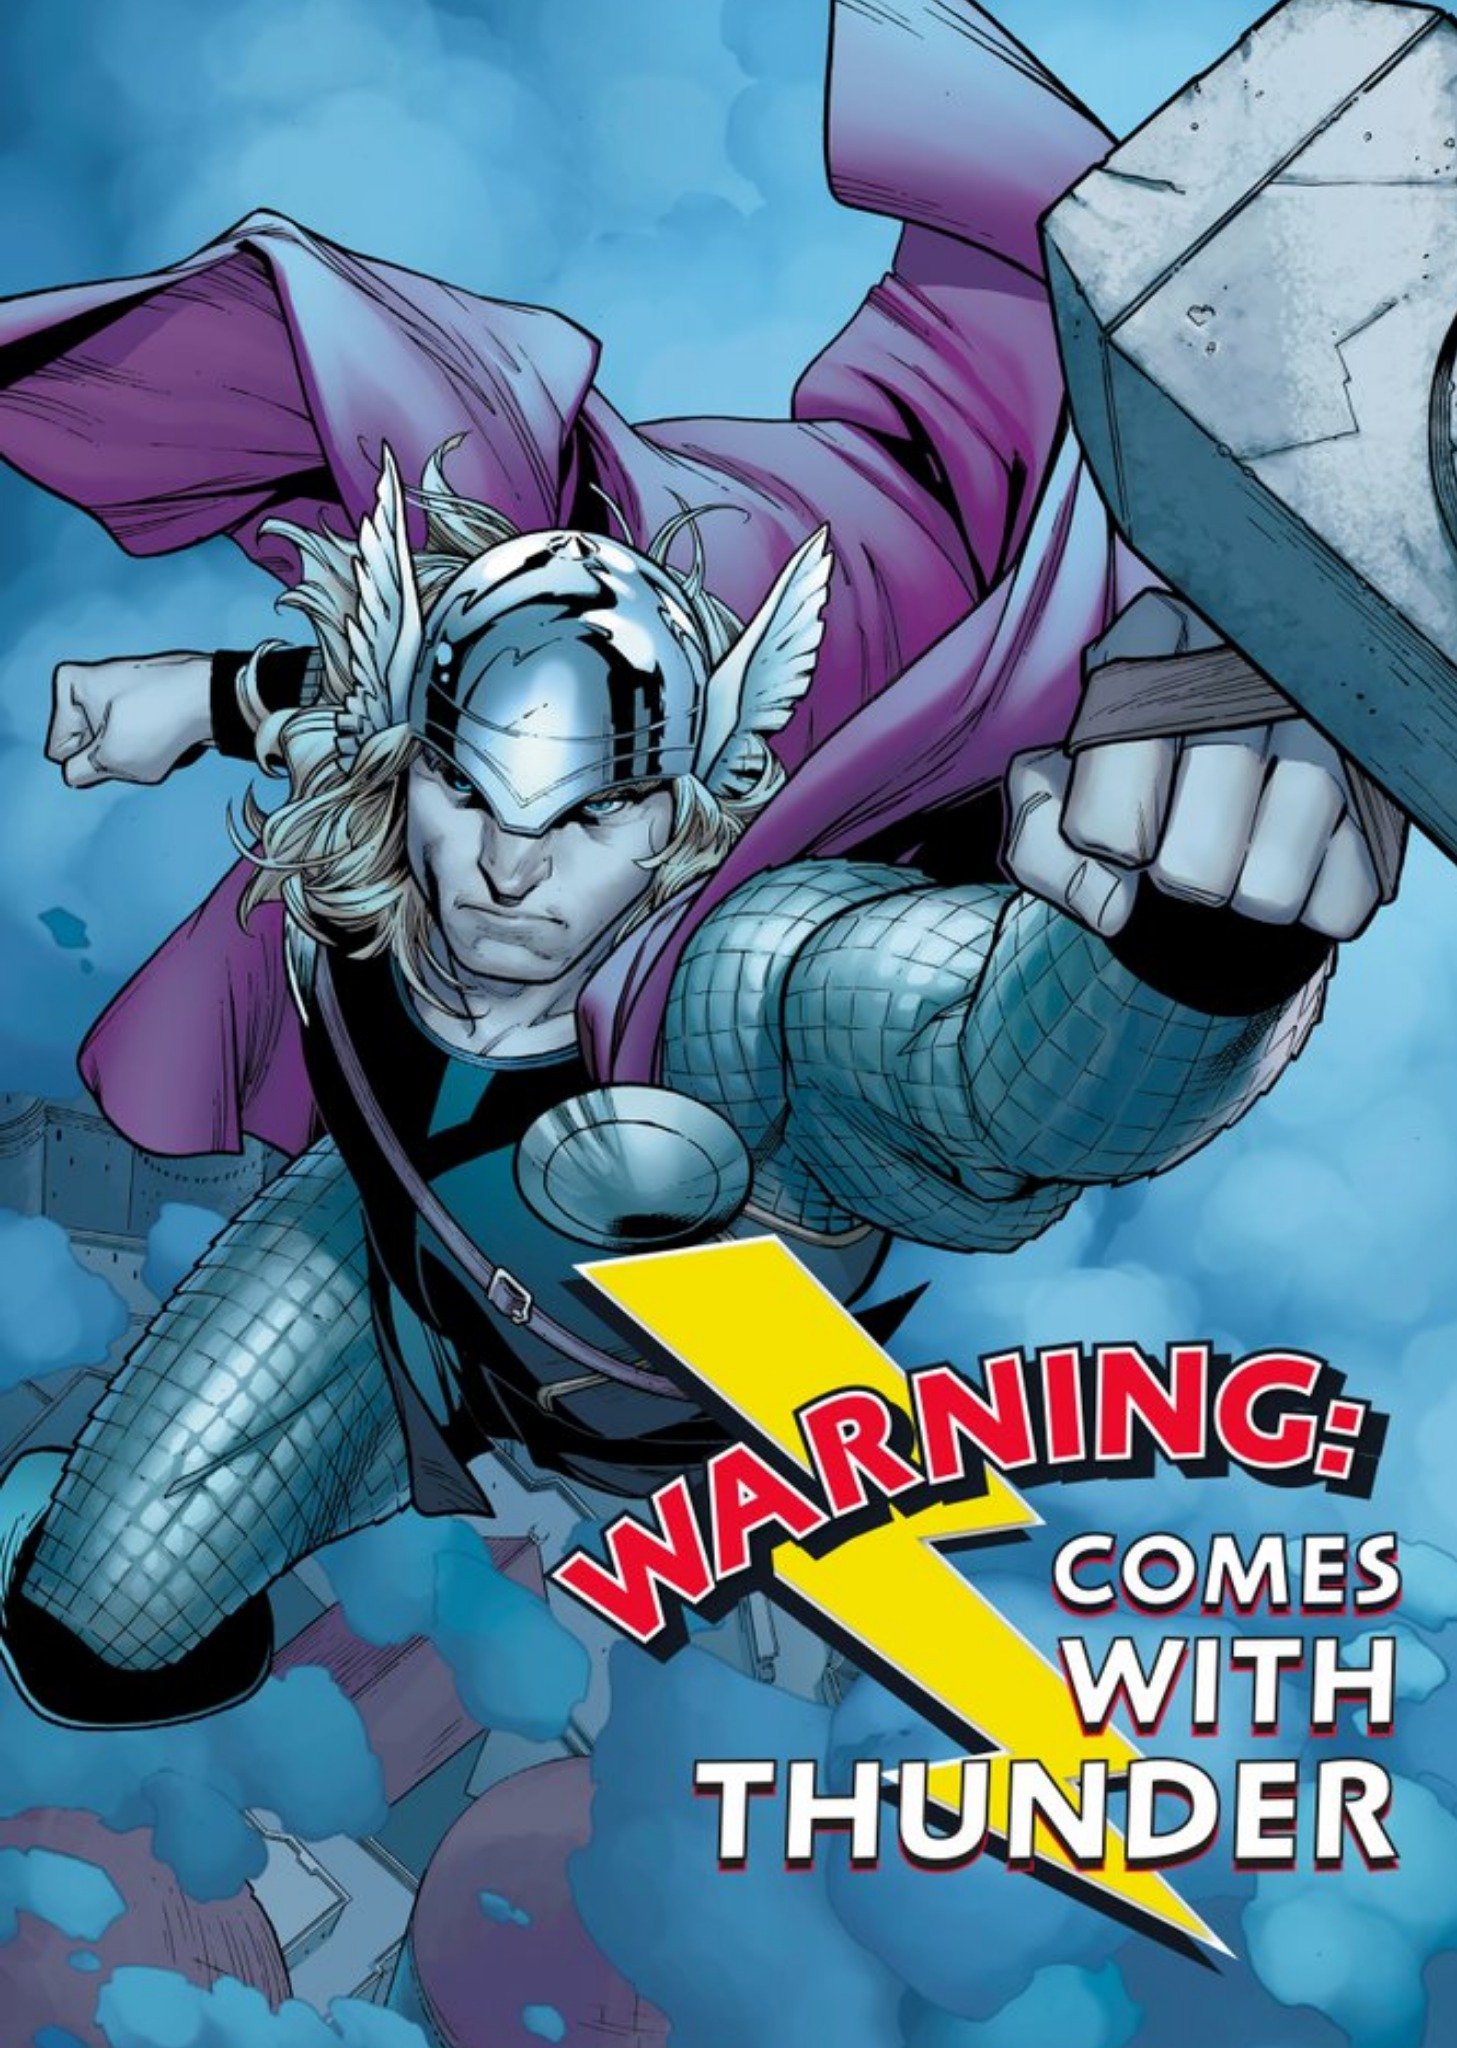 Disney Marvel Avengers Birthday Card - Warning: Comes With Thunder - Thor Ecard